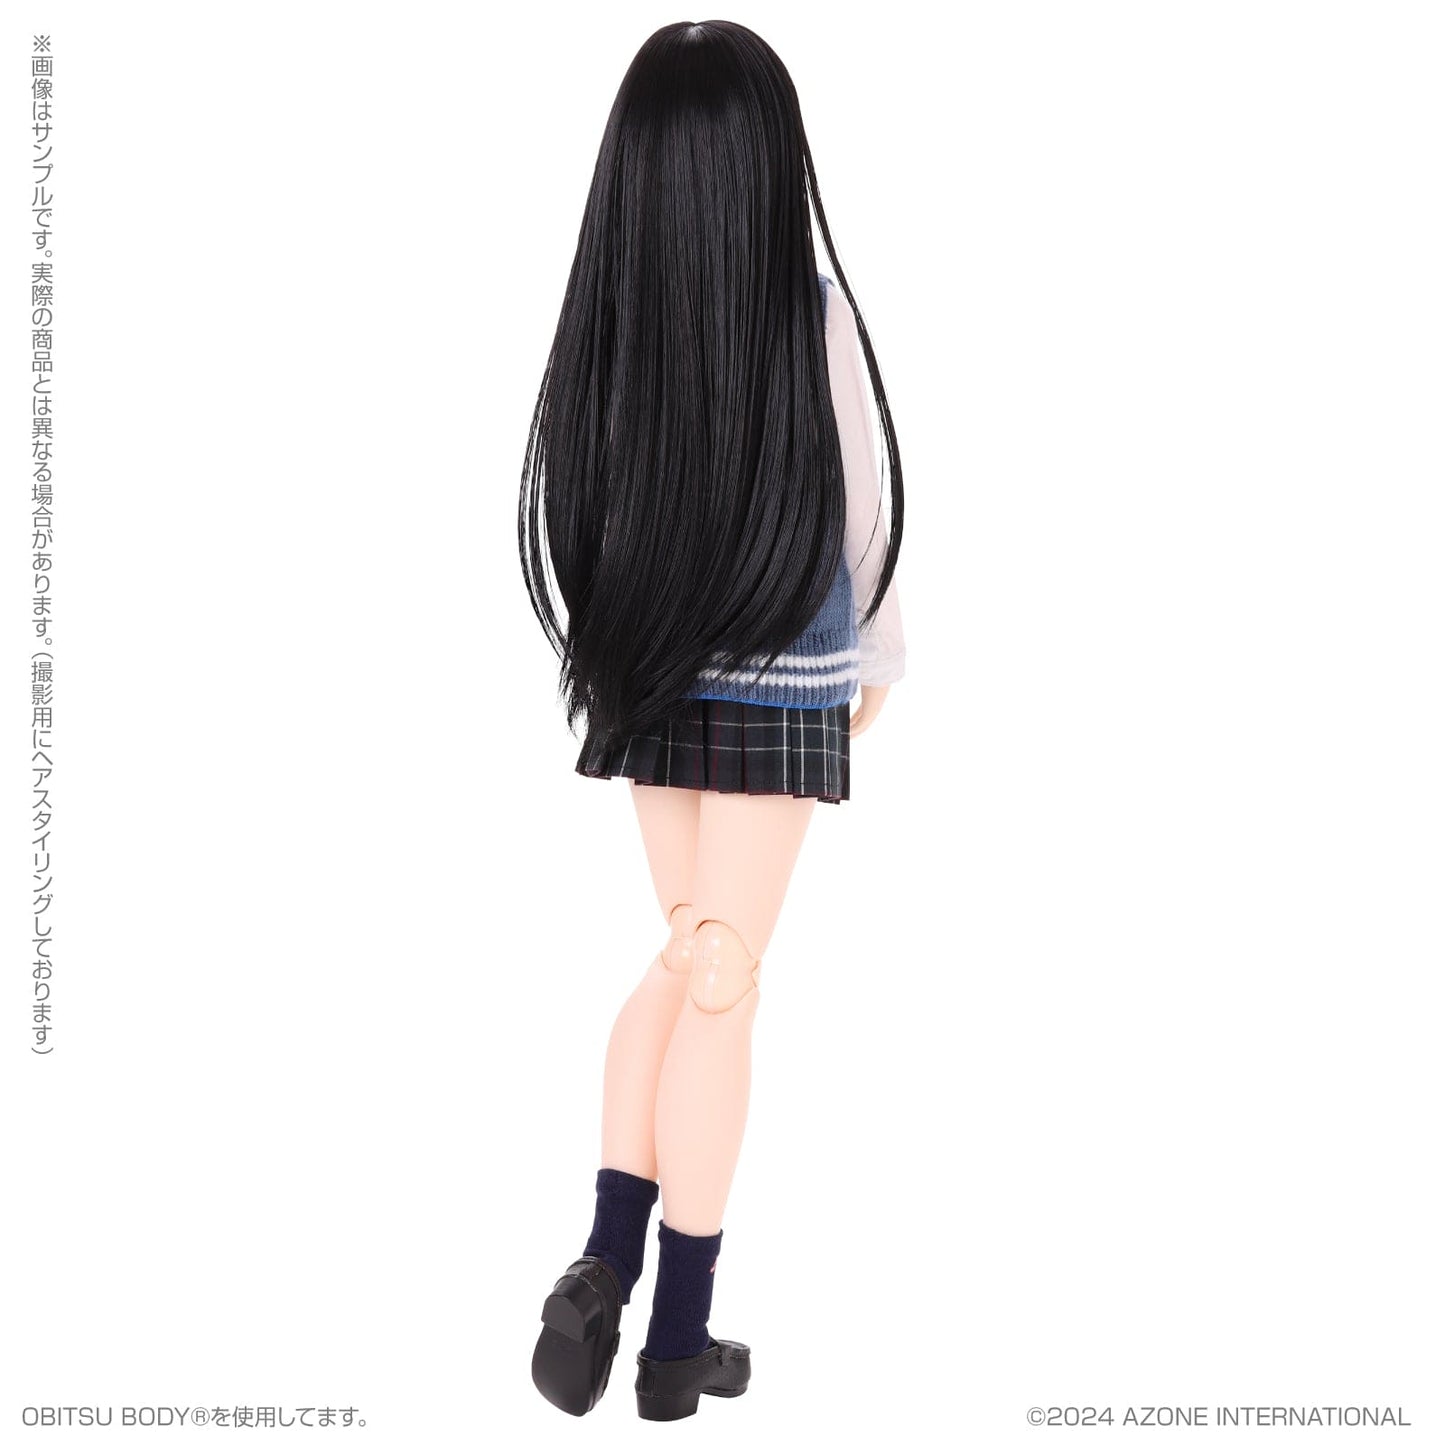 【AZONE】Kazuharu Kina School Uniform Collection / Yui 預購